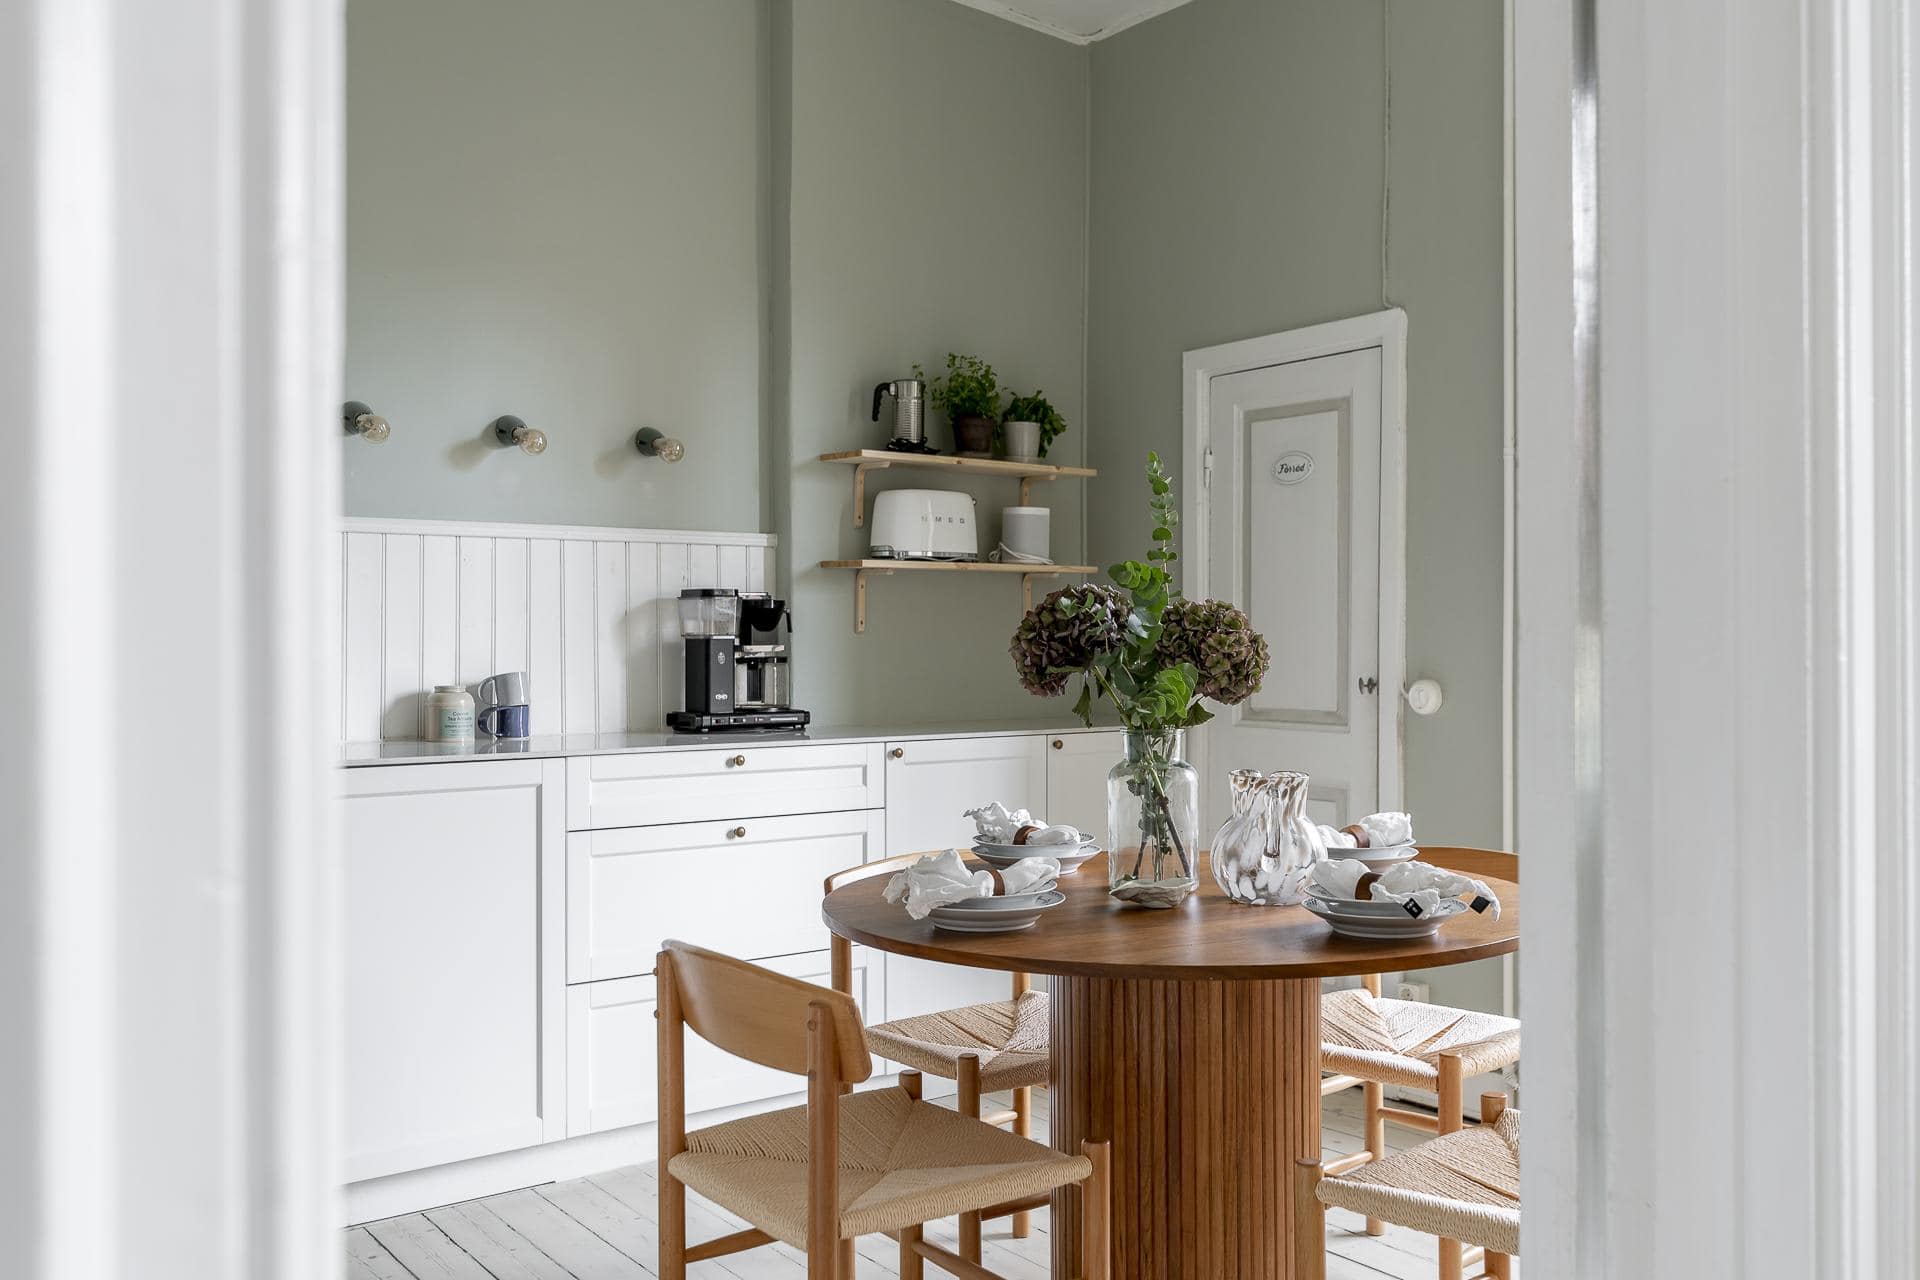 White Shaker Kitchen With A Shiplap Backsplash And Sage Green Walls COCO LAPINE DESIGNCOCO